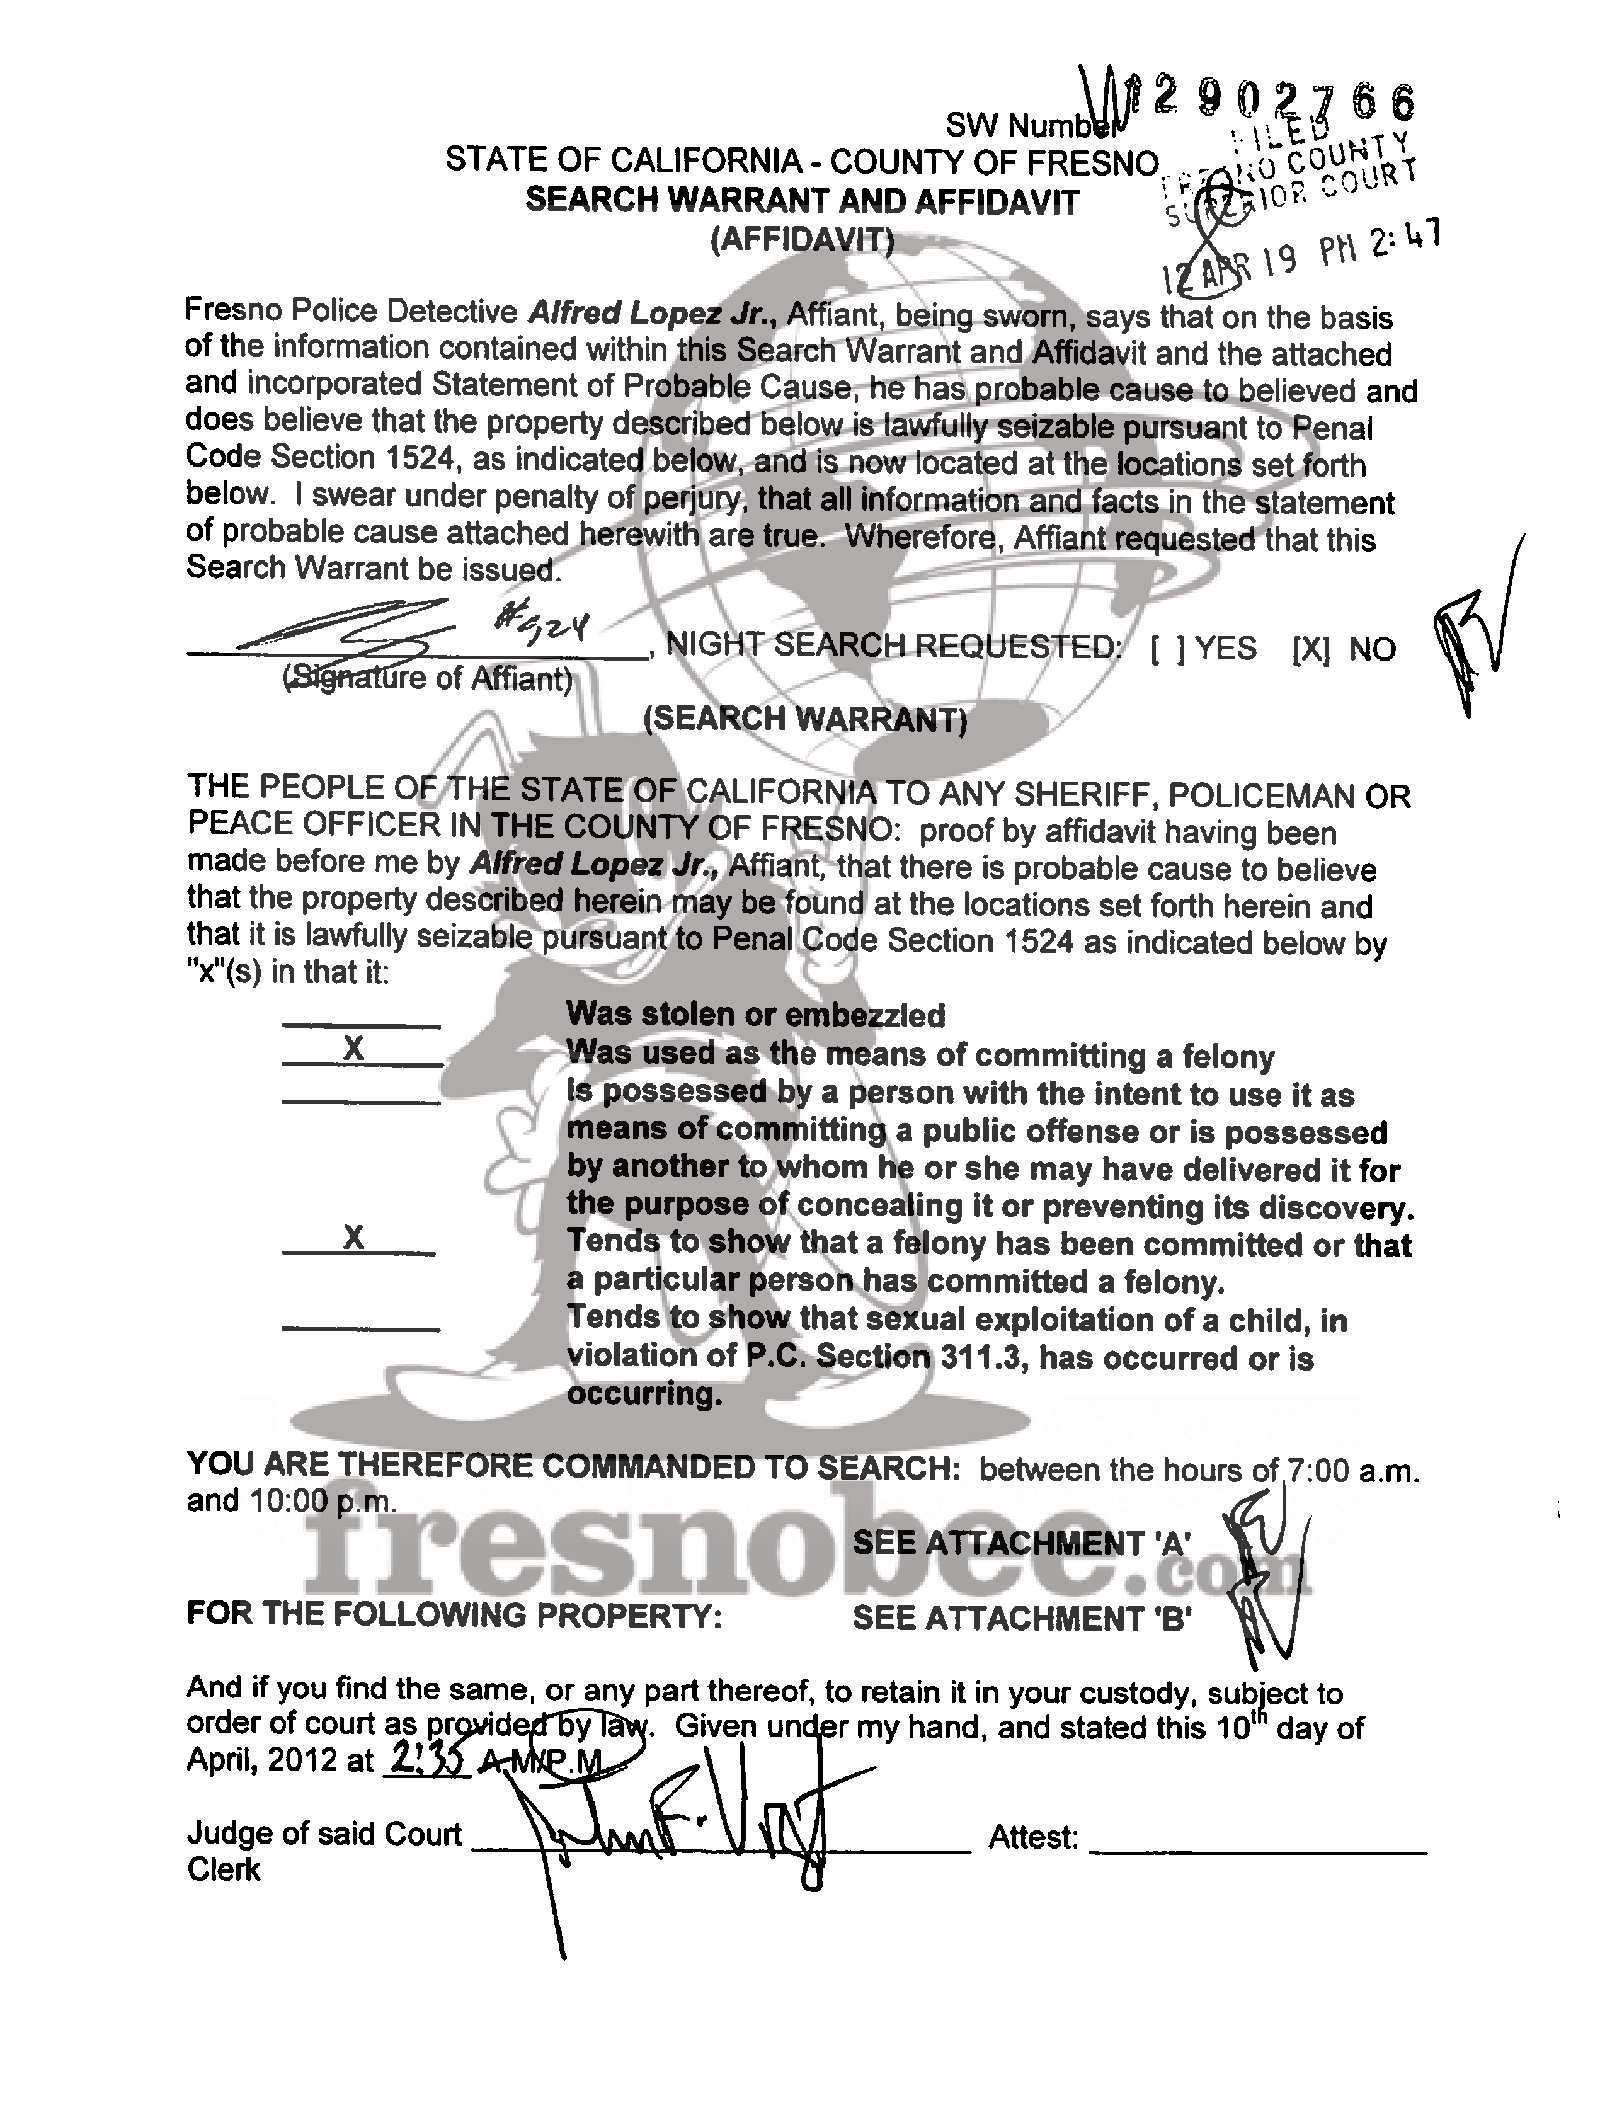 Copy of denman megan search warrant affidavit1.png